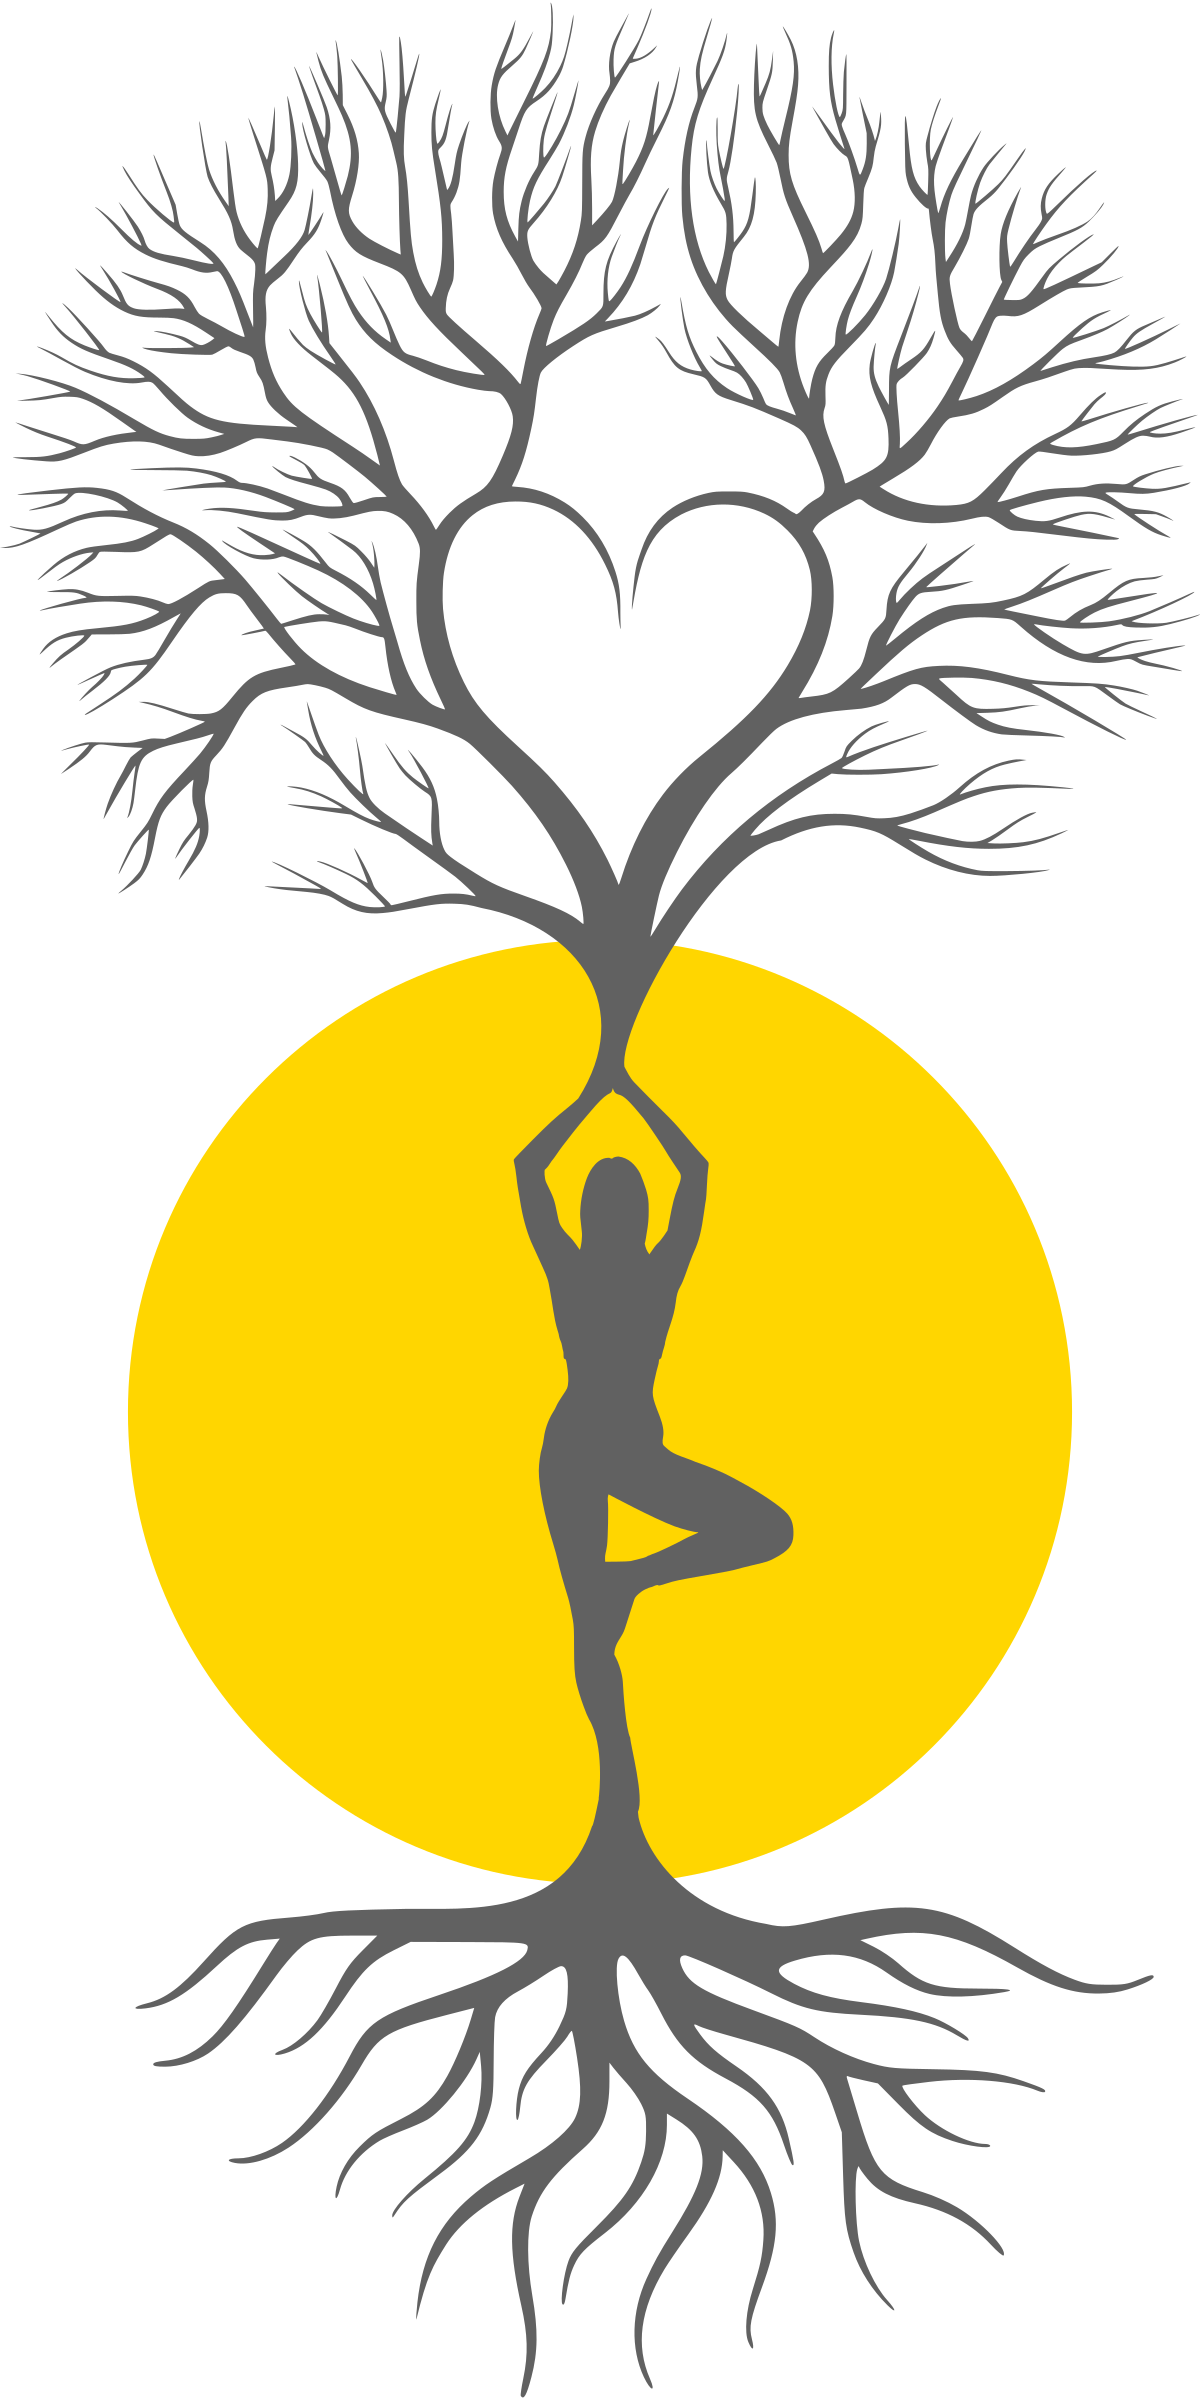 Yoga Tree Silhouette Vector Clipart image - Free stock photo - Public  Domain photo - CC0 Images